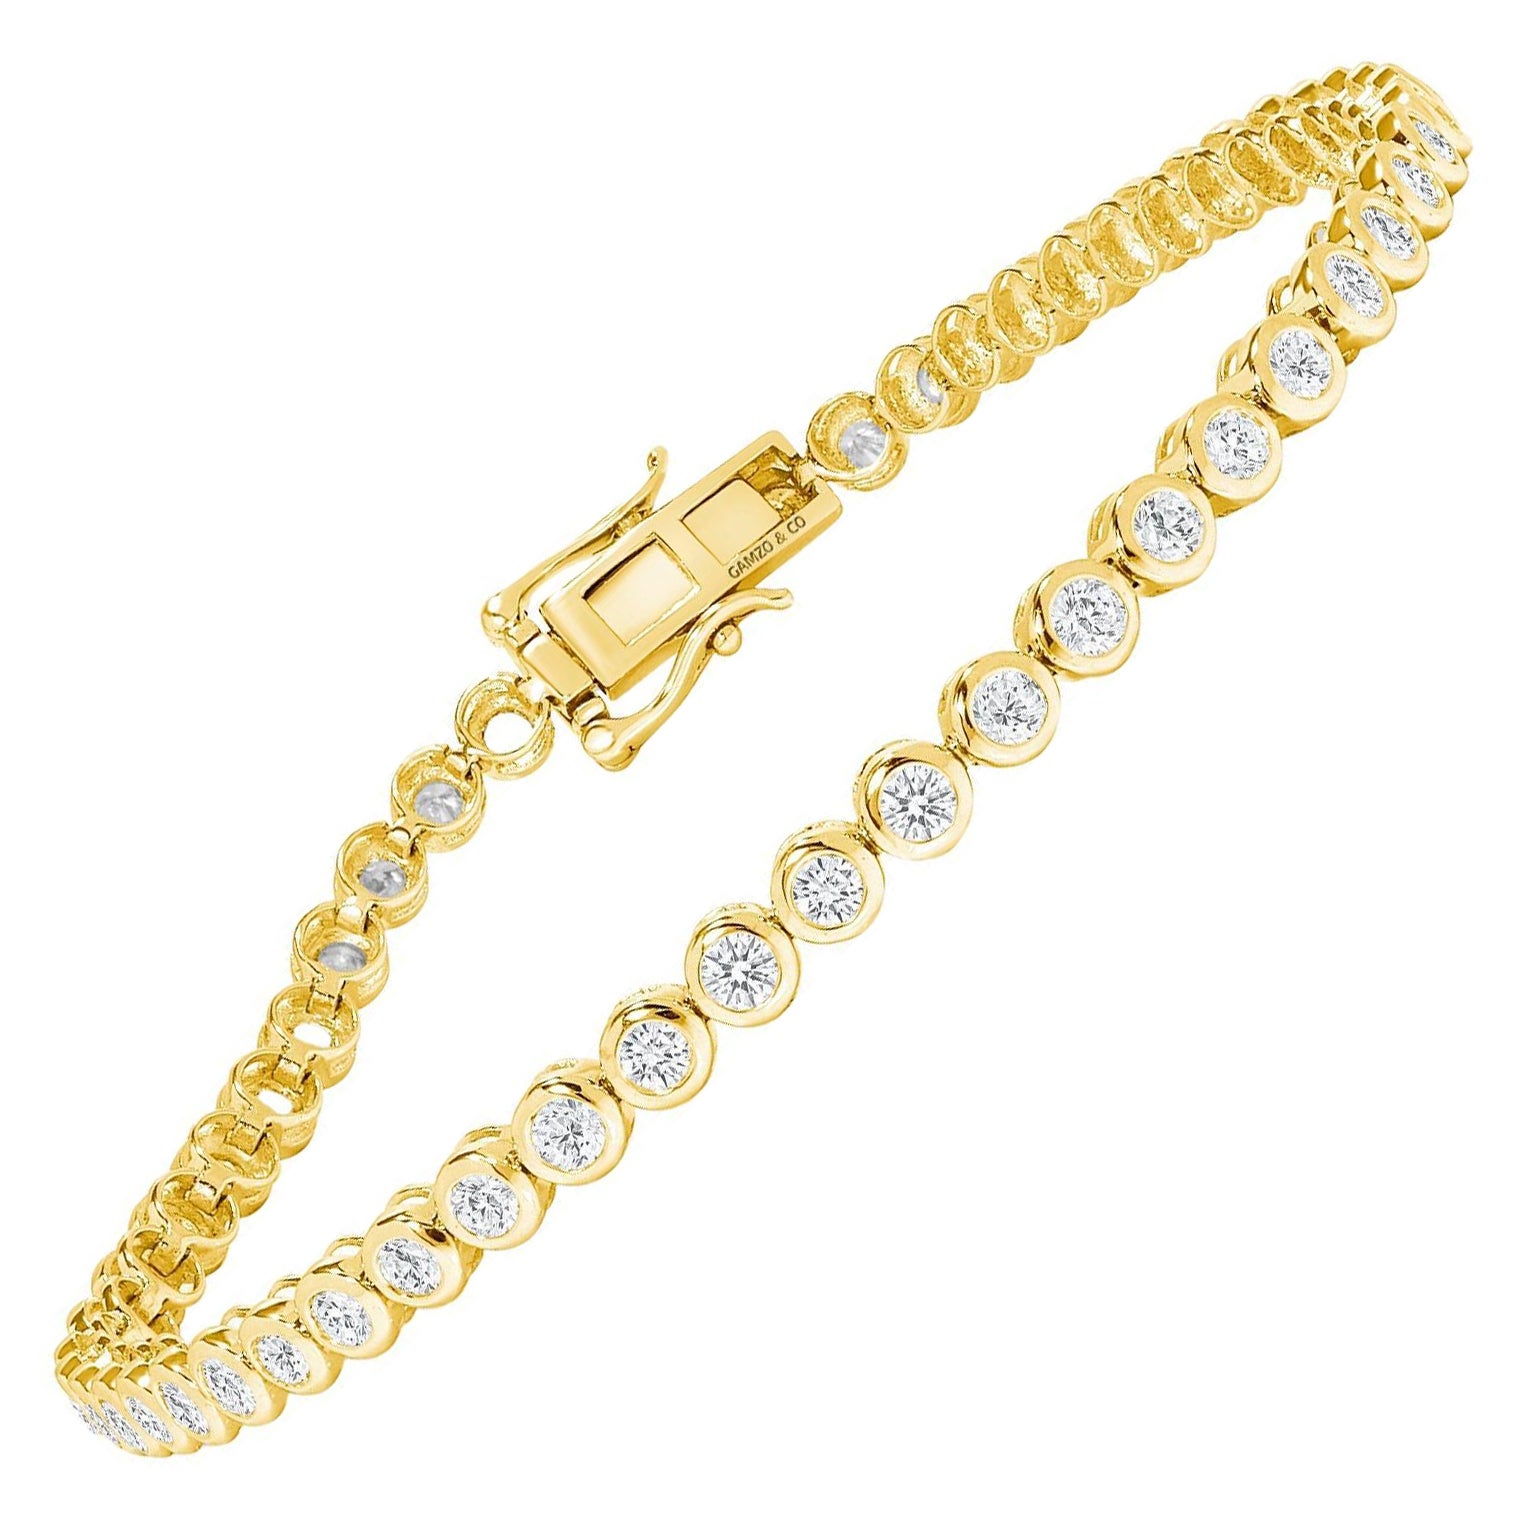 5.5 Inch 14k Yellow Gold 5 Carat Round Diamond Illusion Setting Tennis Bracelet